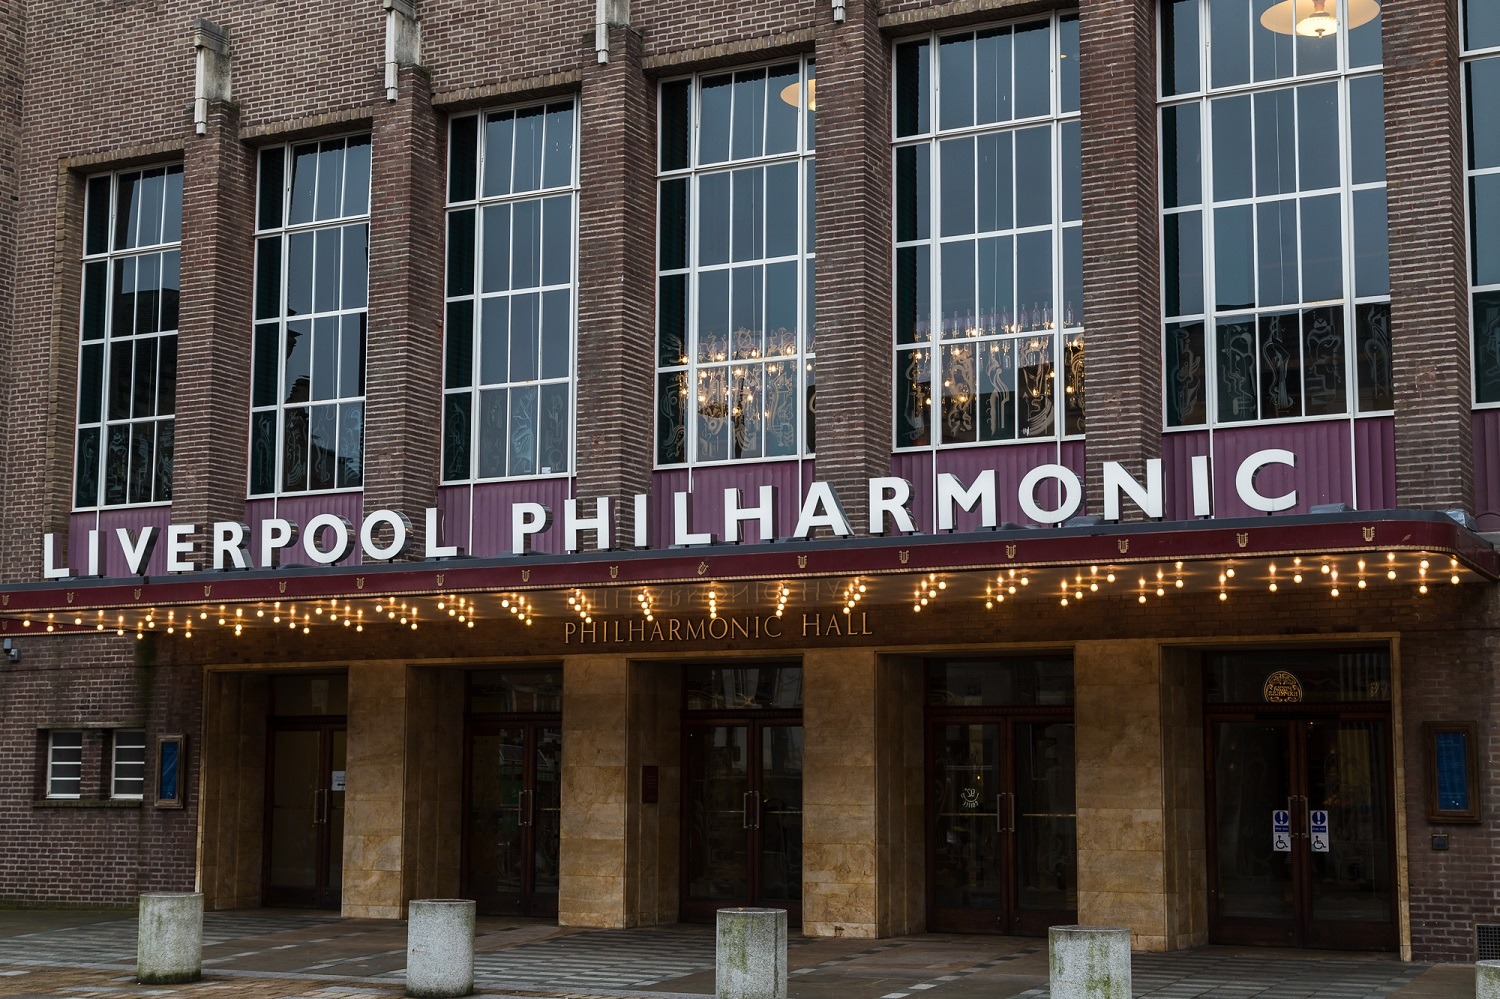 Liverpool Philharmonic Hall 